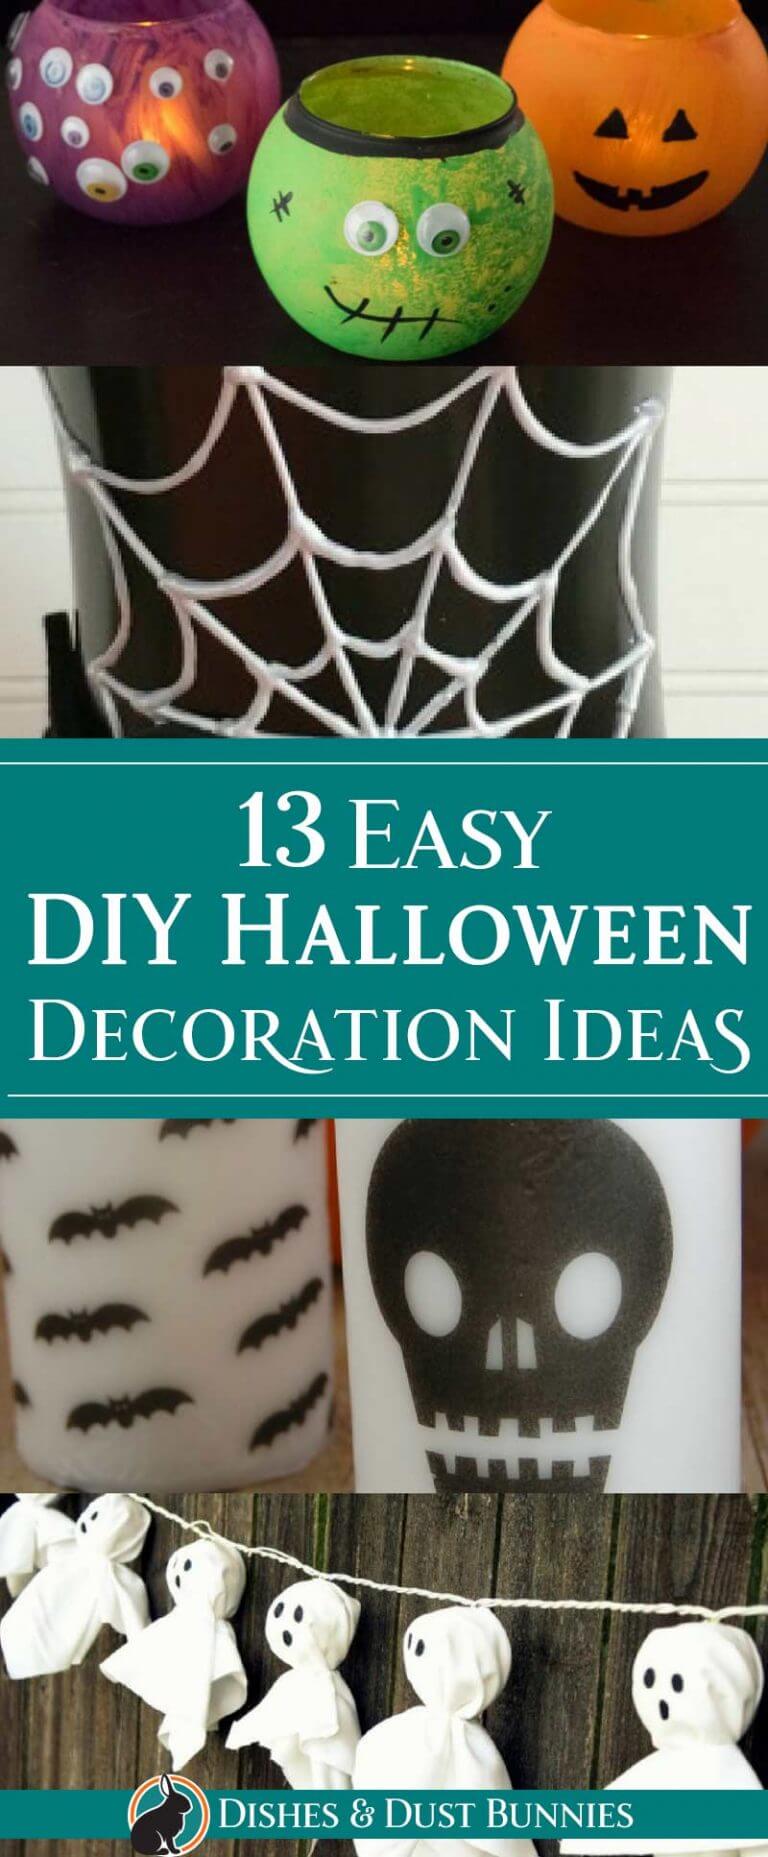 13 Easy DIY Halloween Decoration Ideas Dishes & Dust Bunnies